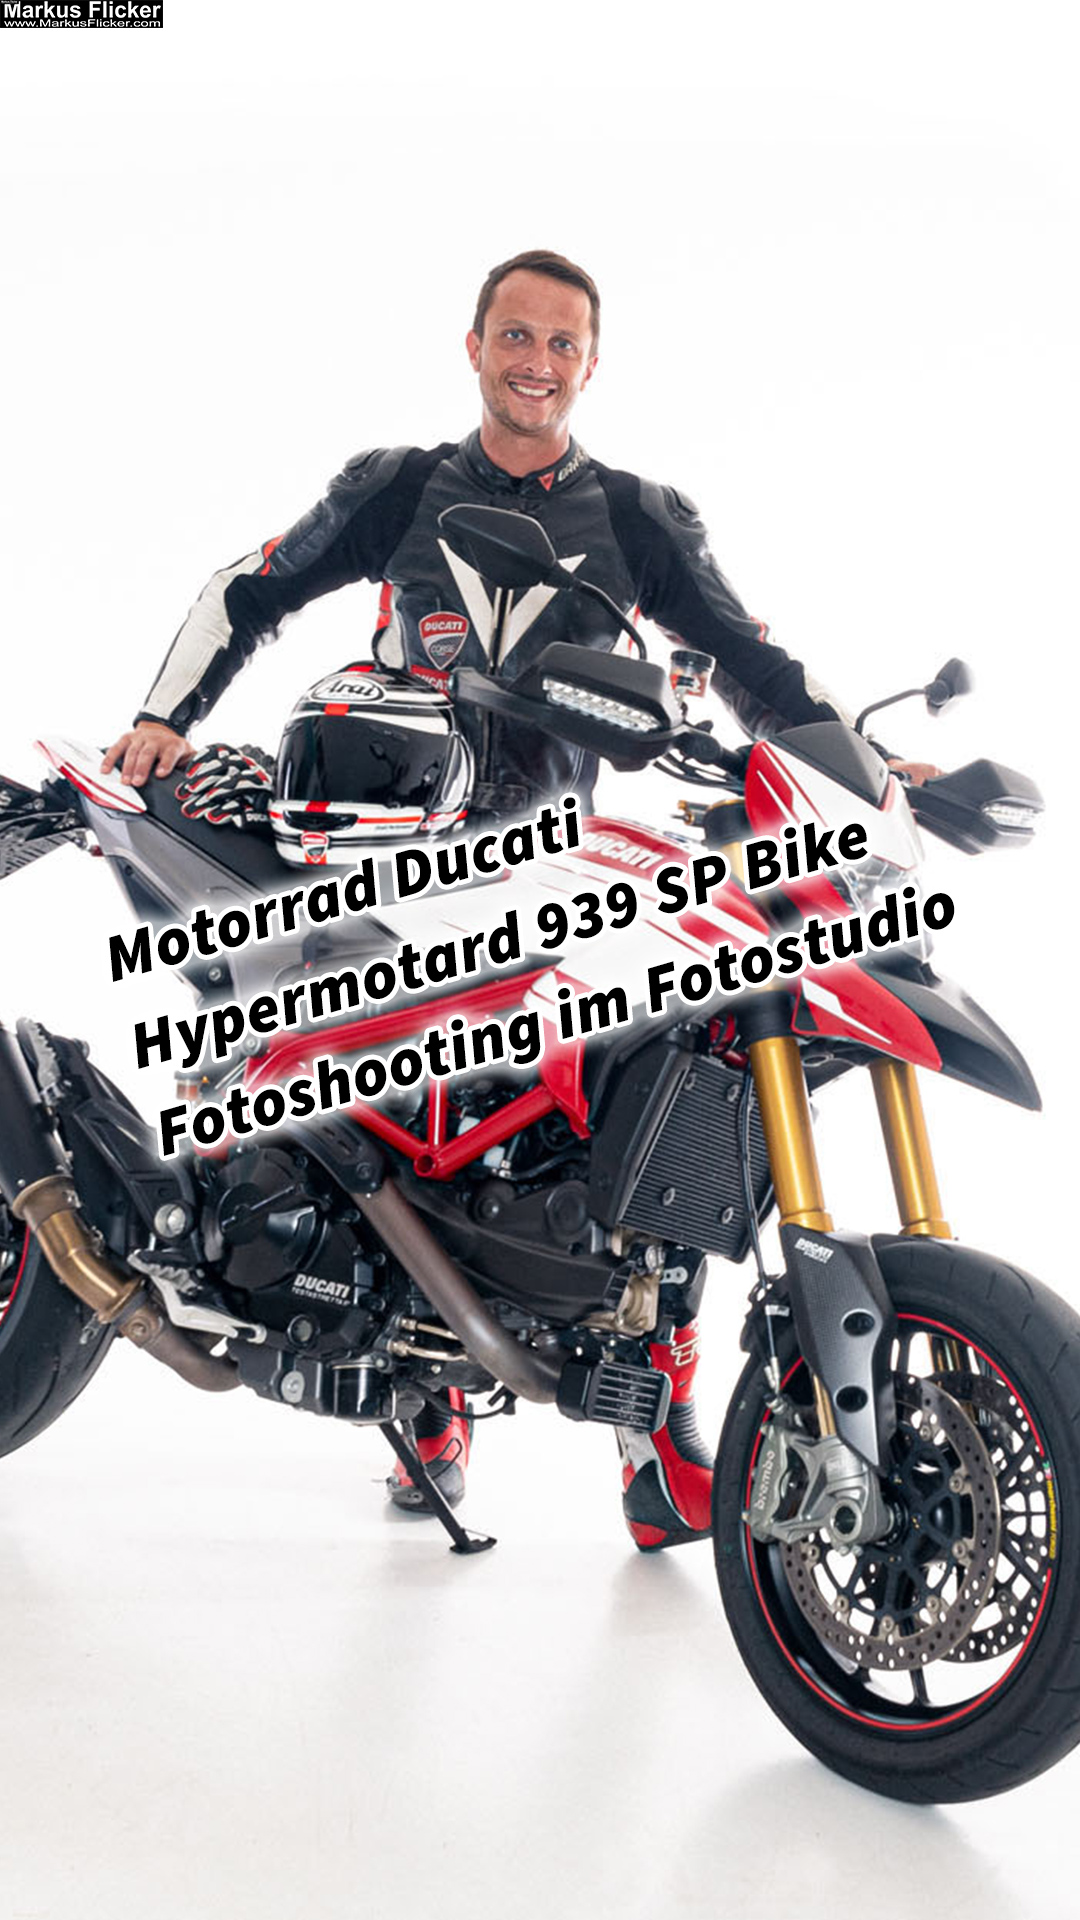 Motorrad Ducati Hypermotard 939 SP Bike Fotoshooting im Fotostudio